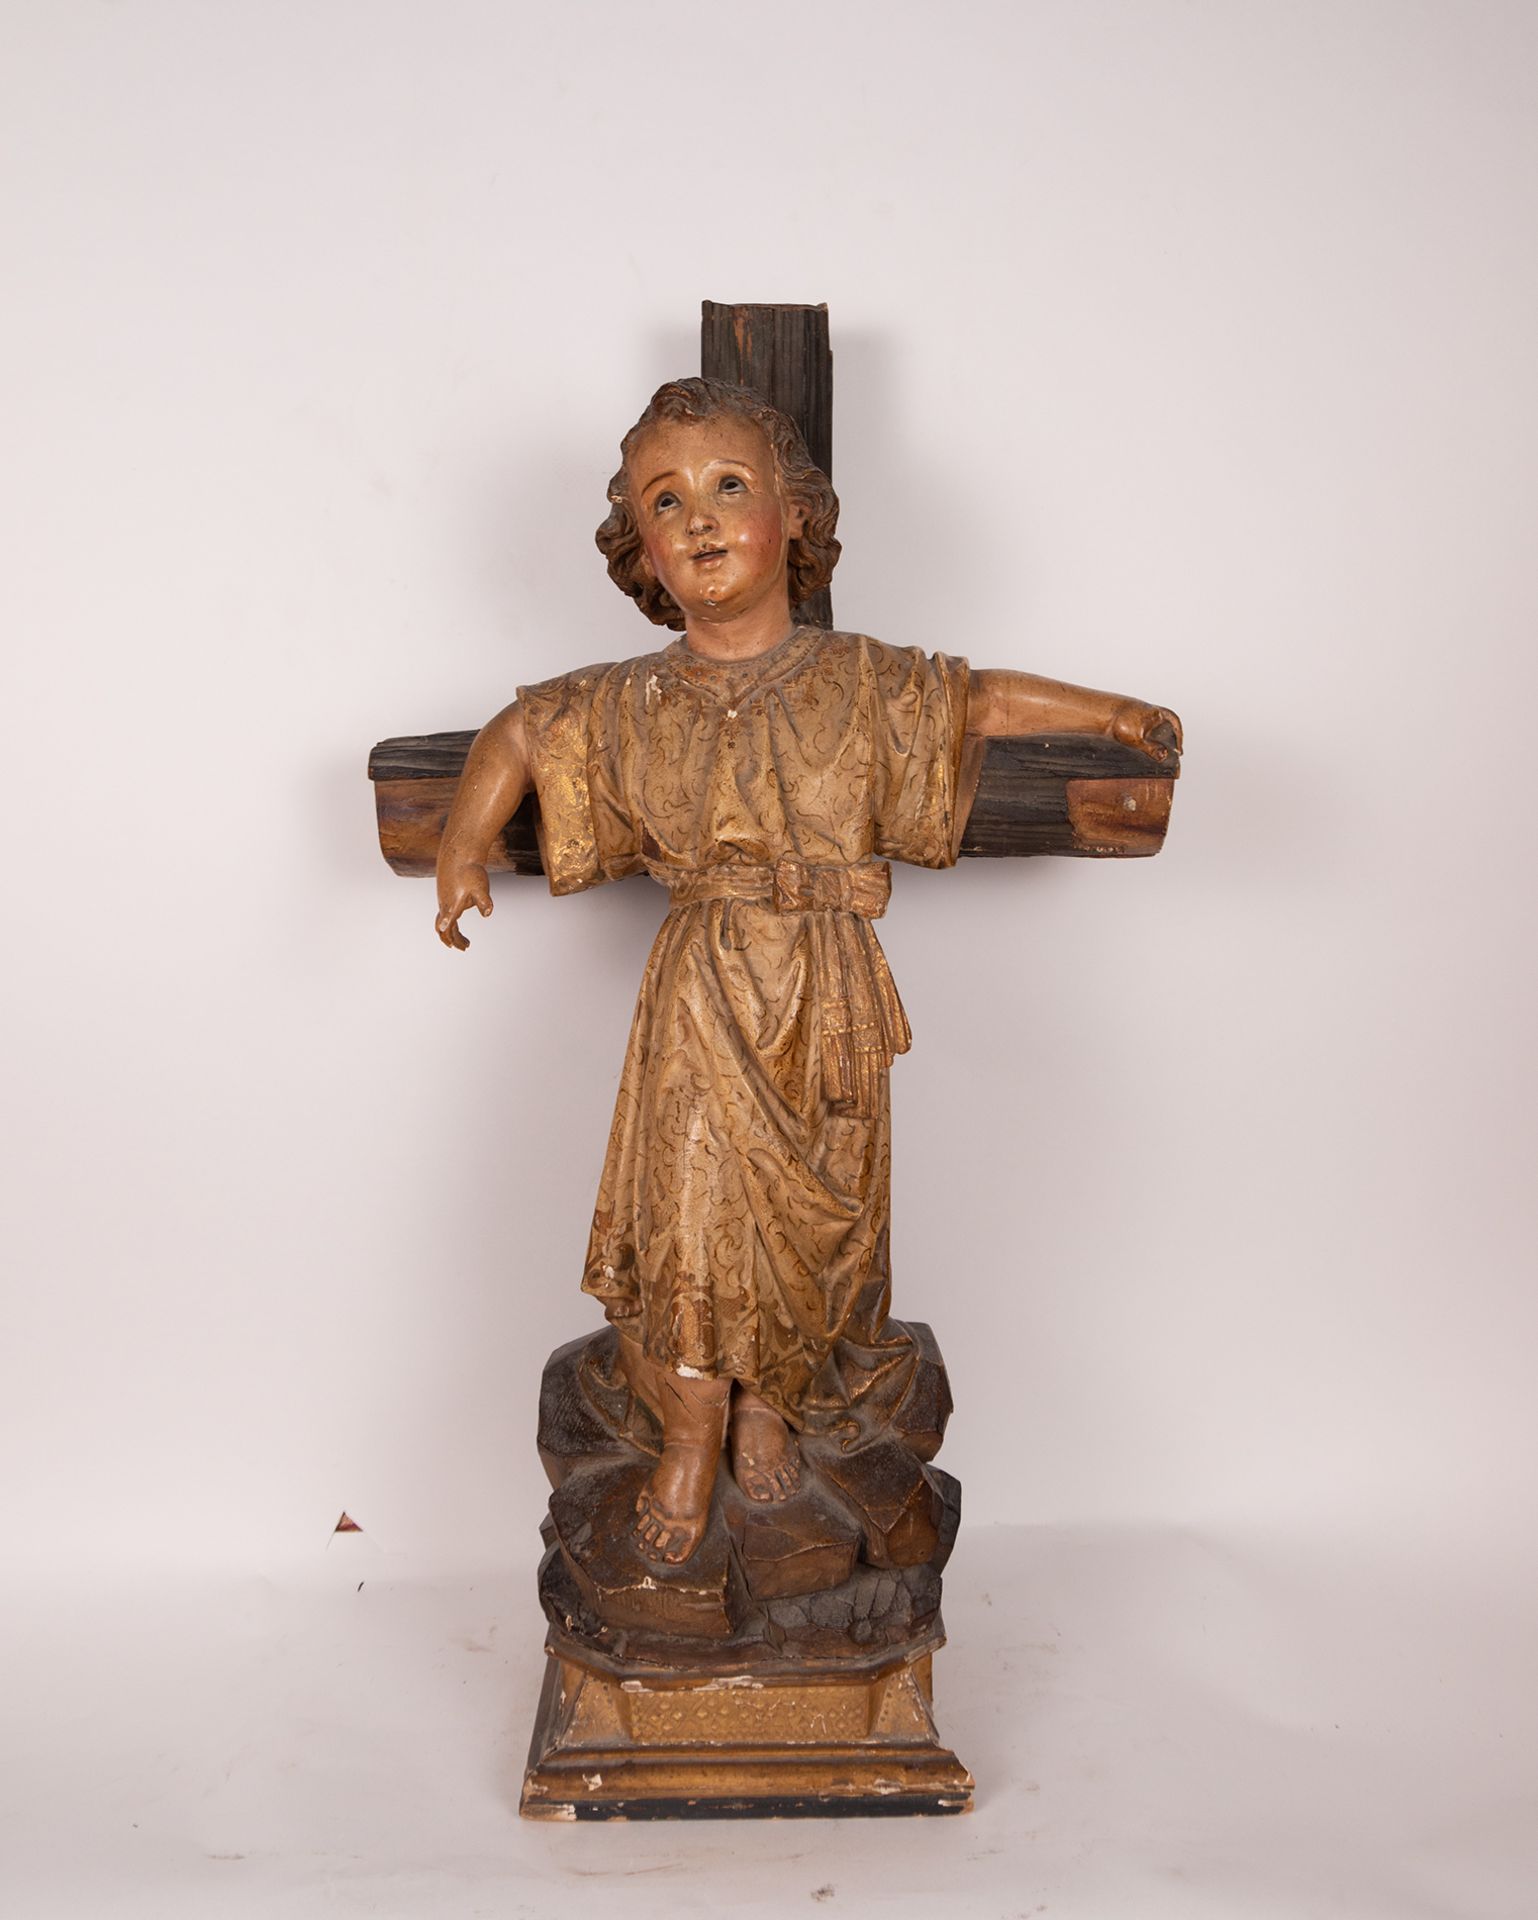 Enfant Jesus of the Passion, 19th century Catalan school